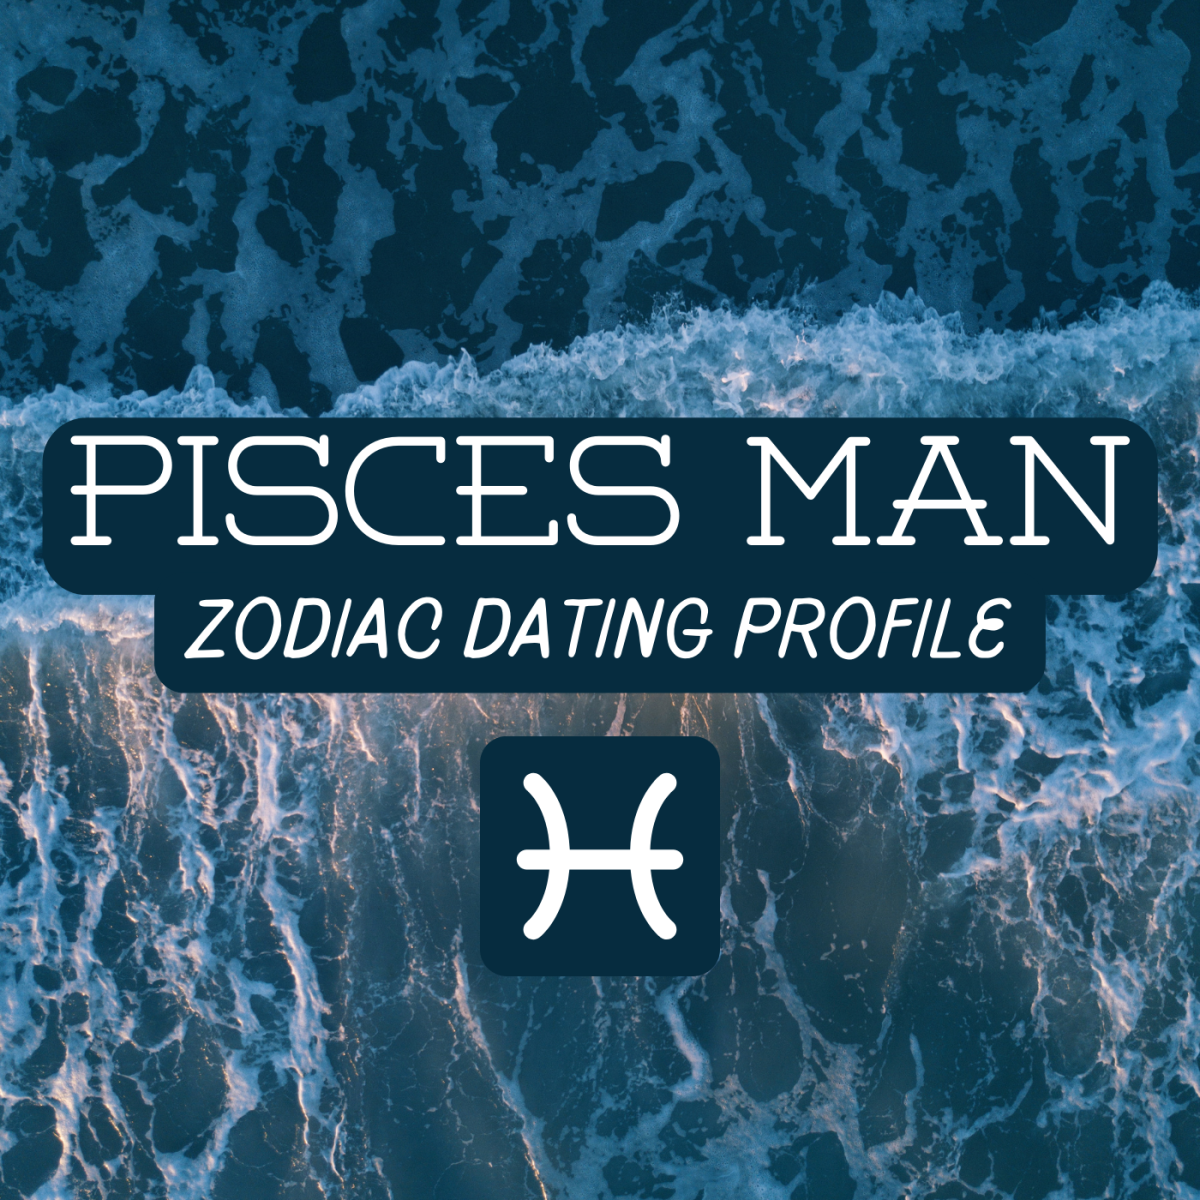 Dating a Pisces Man: Mr. Sensitive